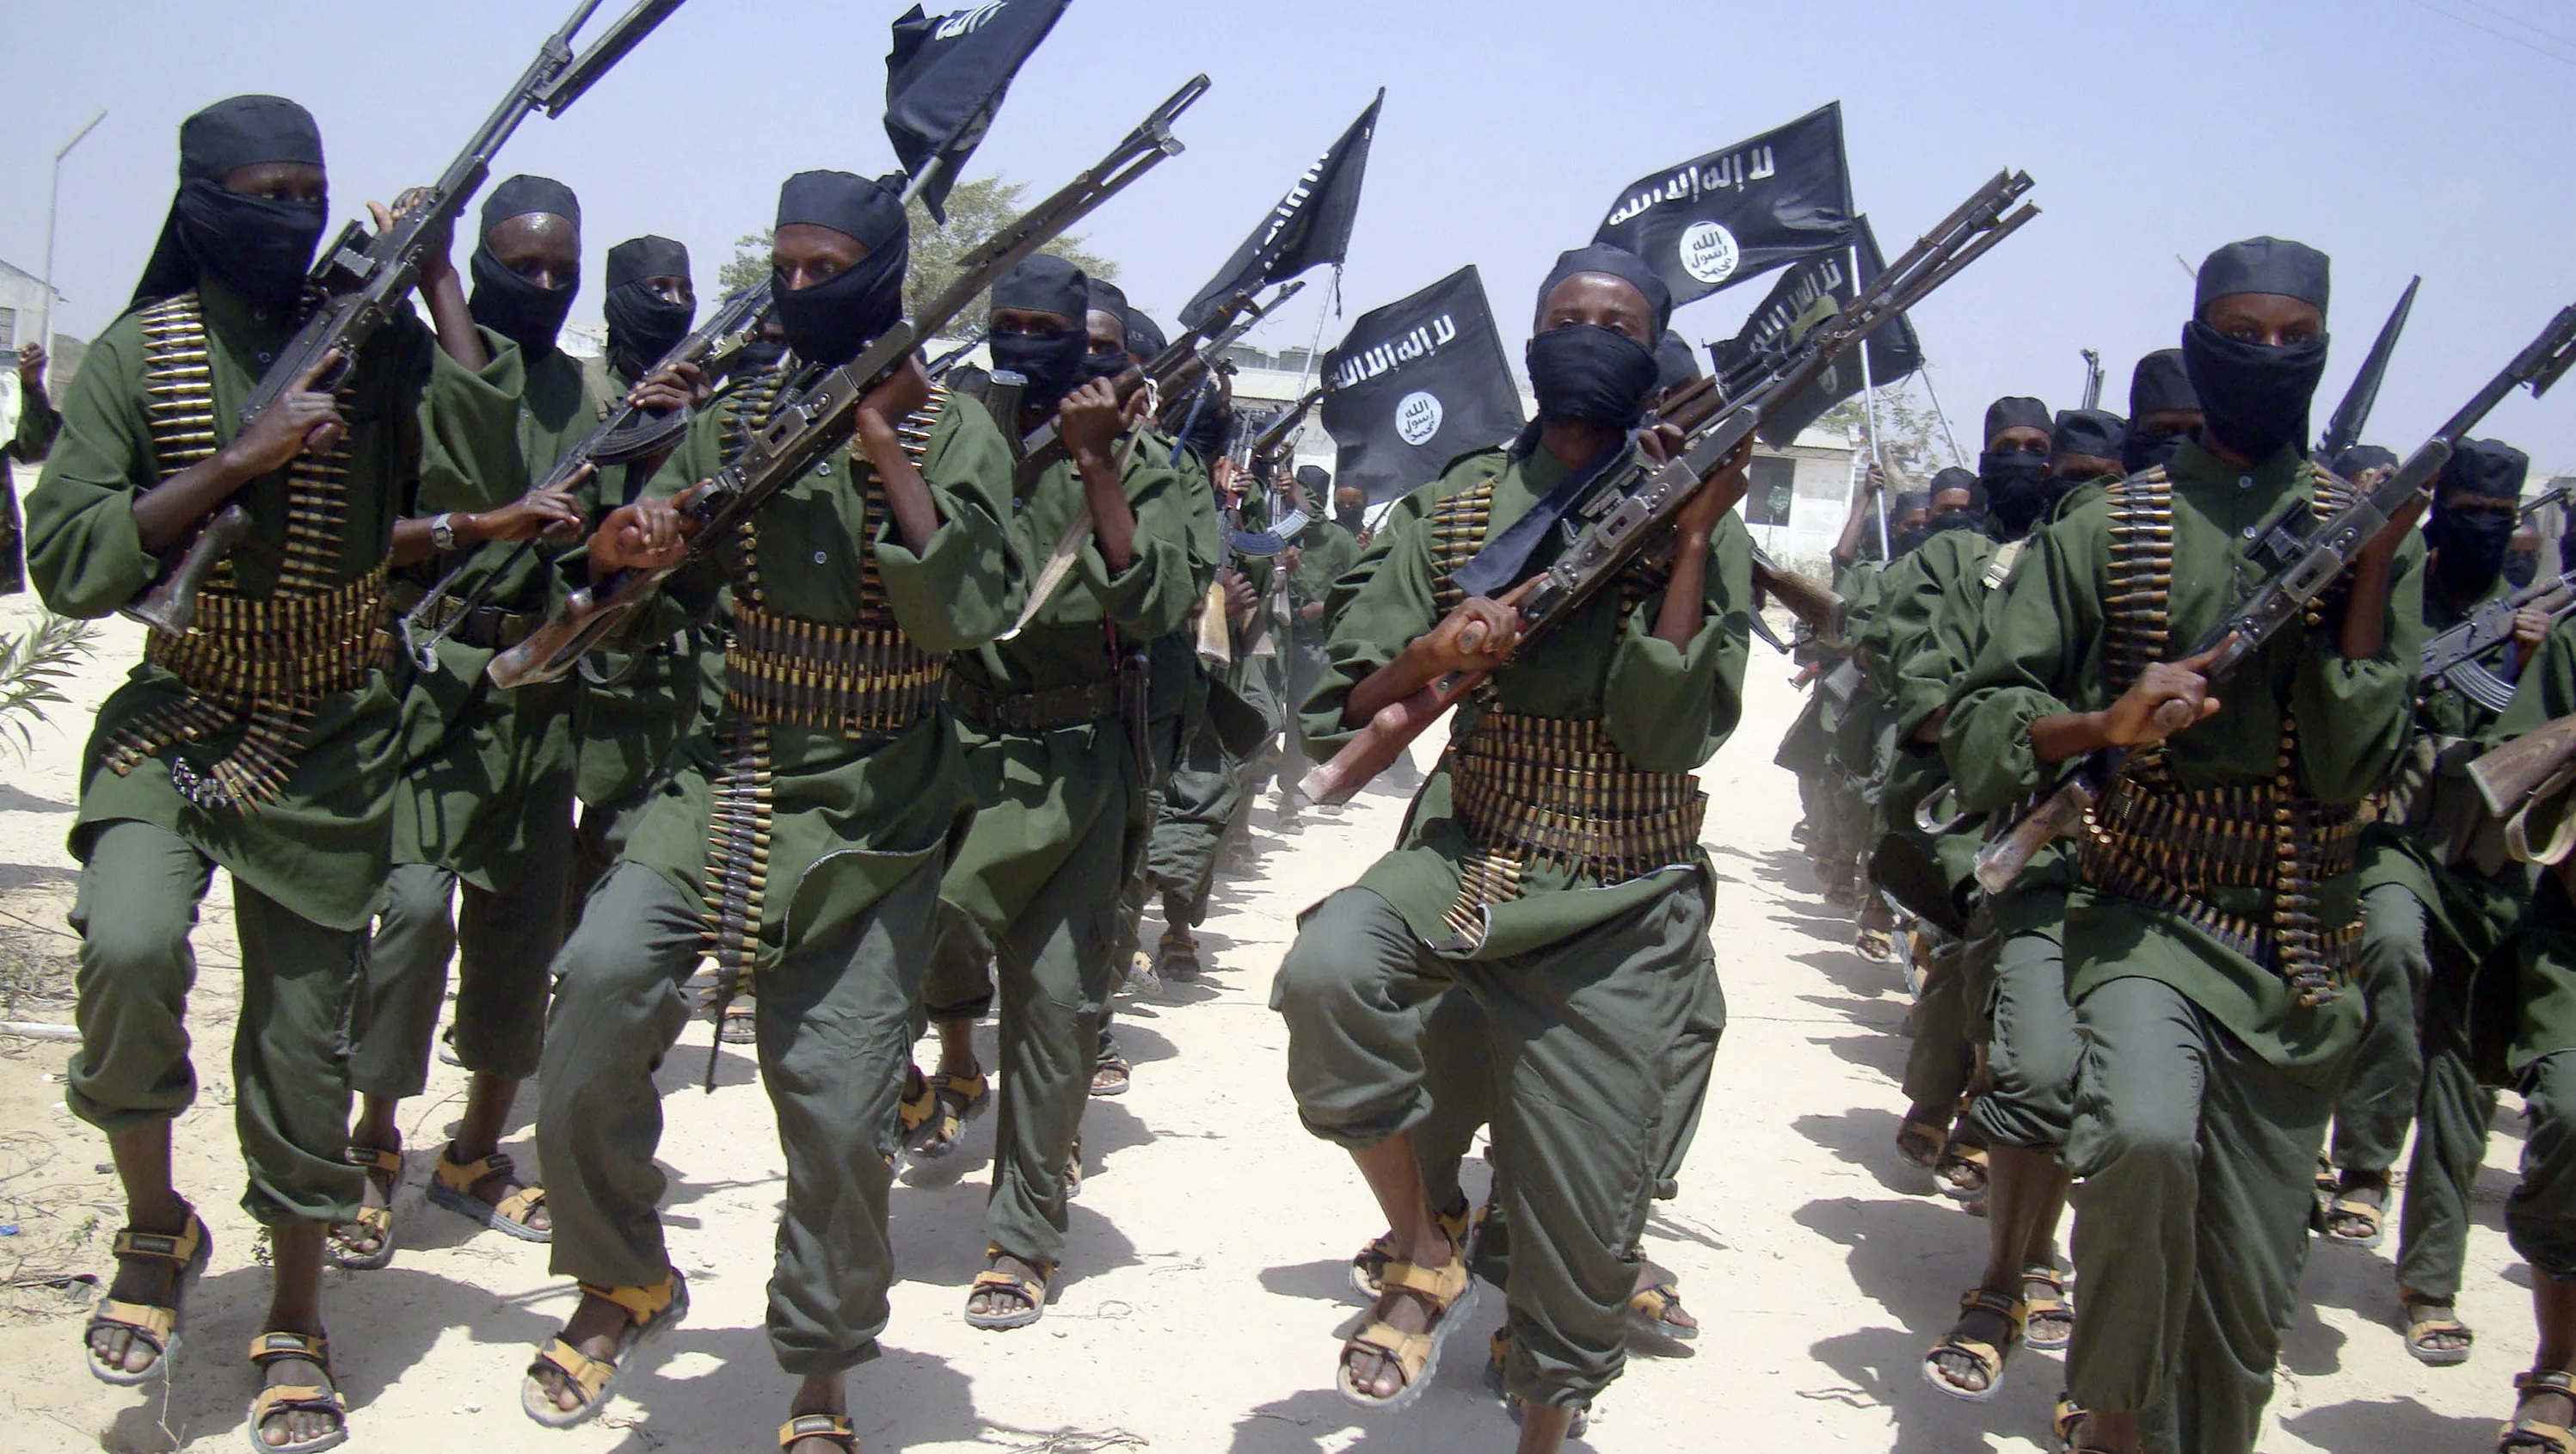 Al-Shabab-are-criminal-terrorists-not-jihadis